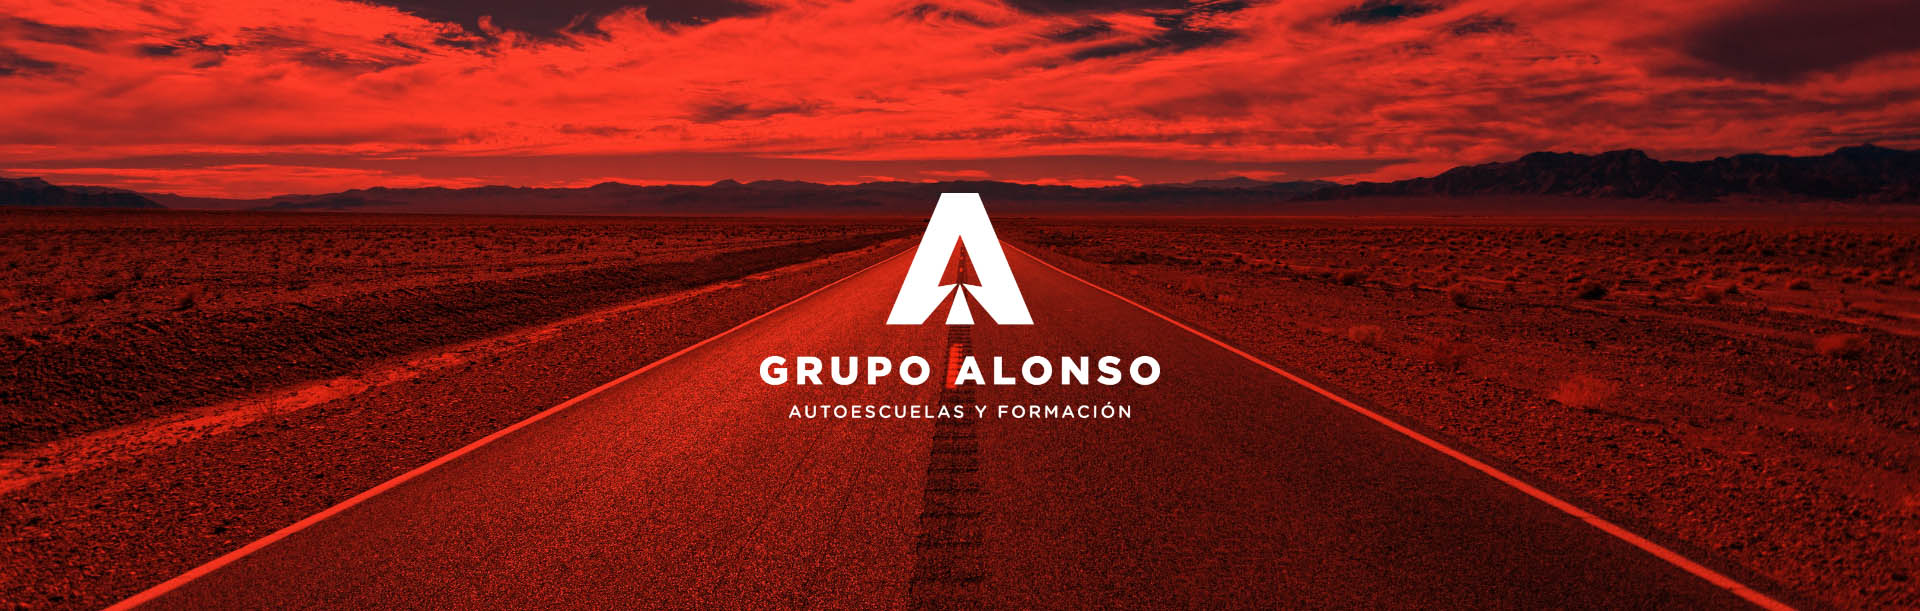 Grupo Alonso arte carretera